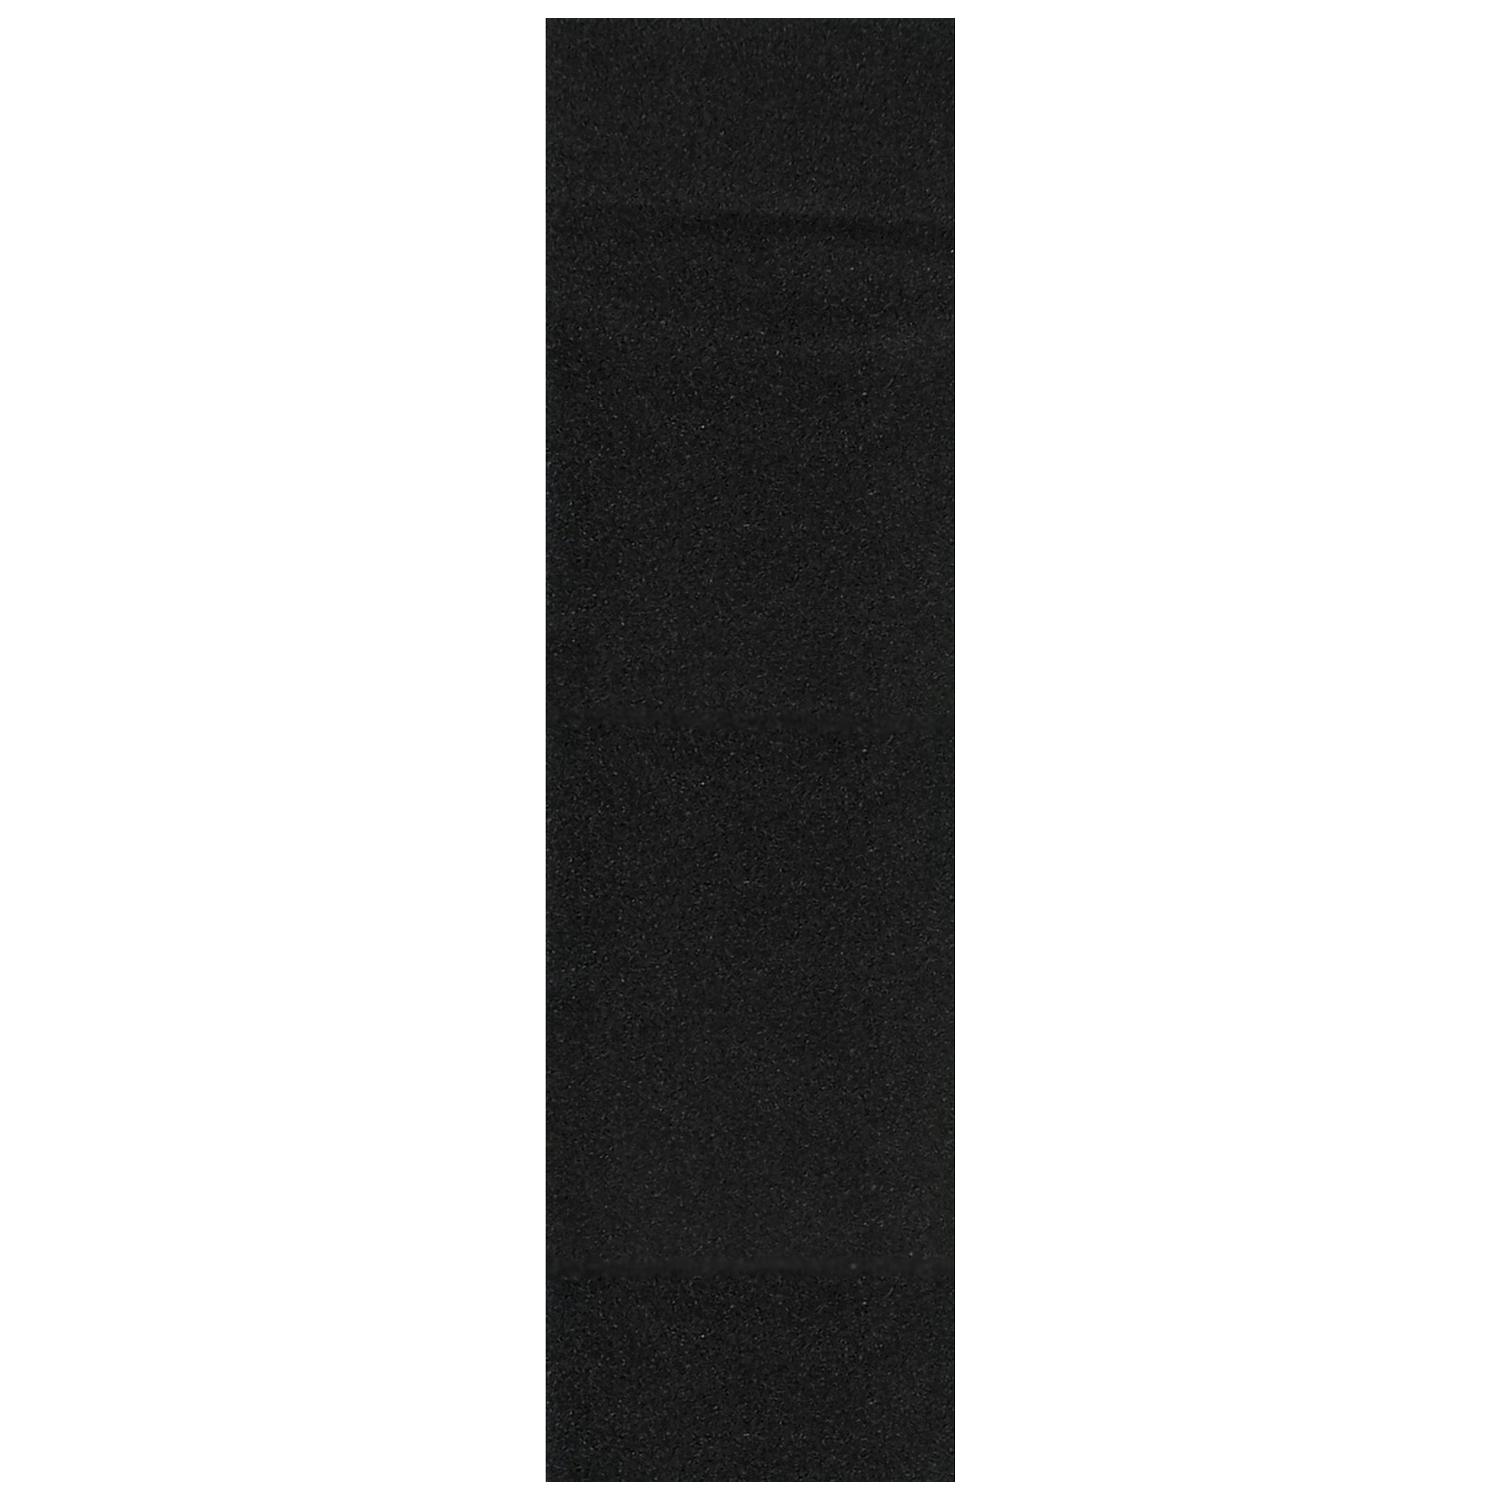 Skateboard/Longboard Presa 9x33 Inch Black Diamond Colorati Griptape Foglio 